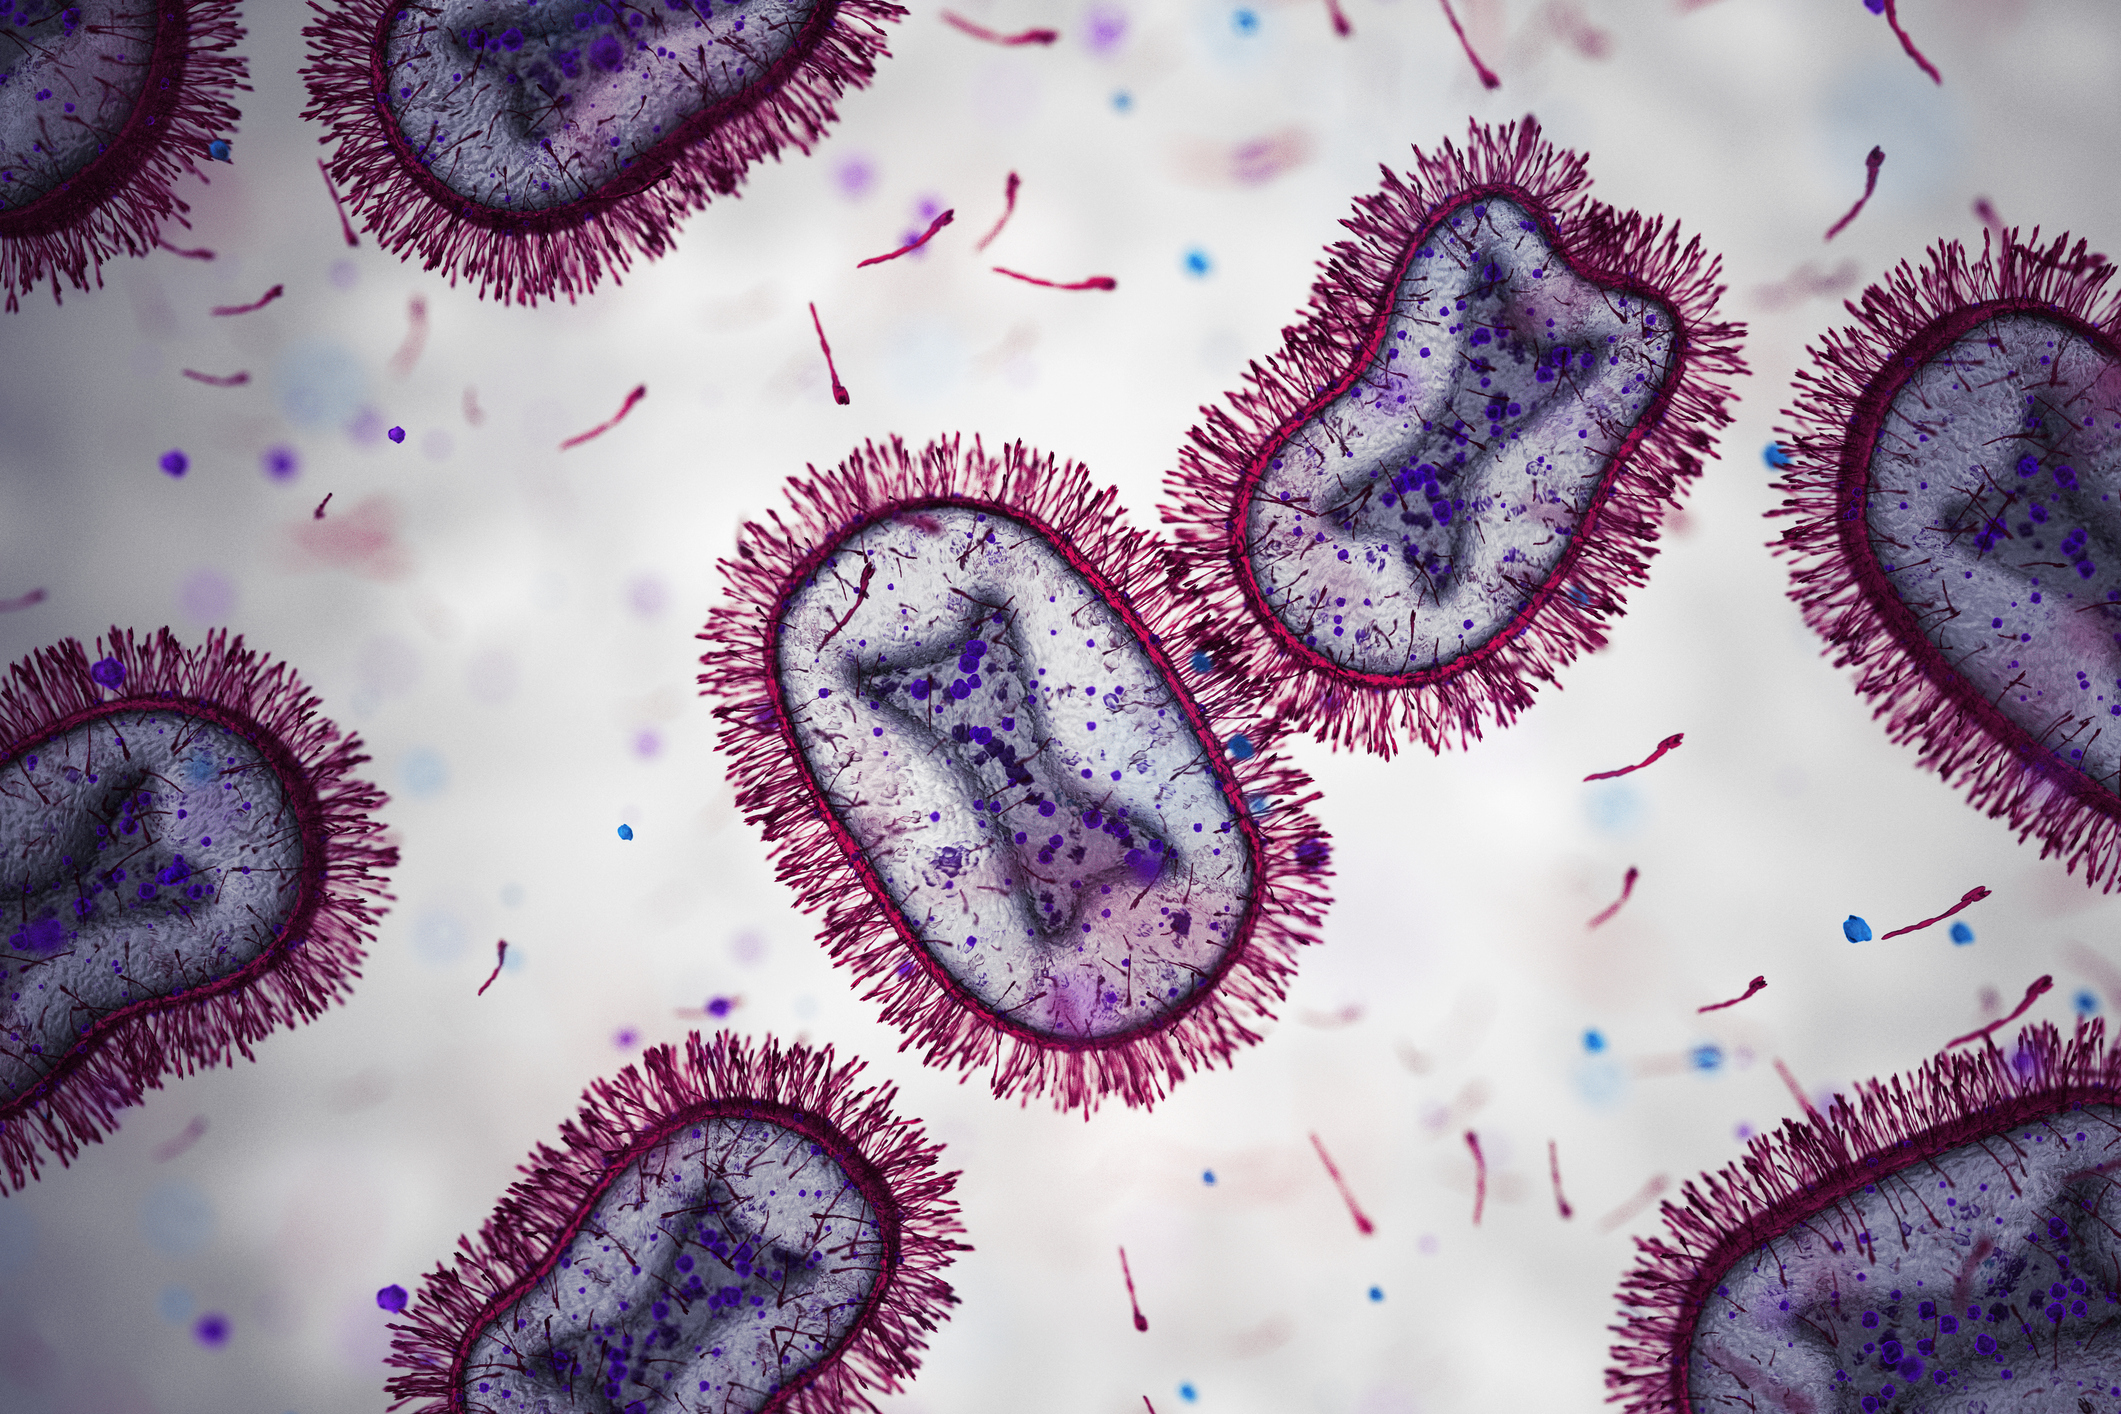 microscopic image of monkeypox viruses